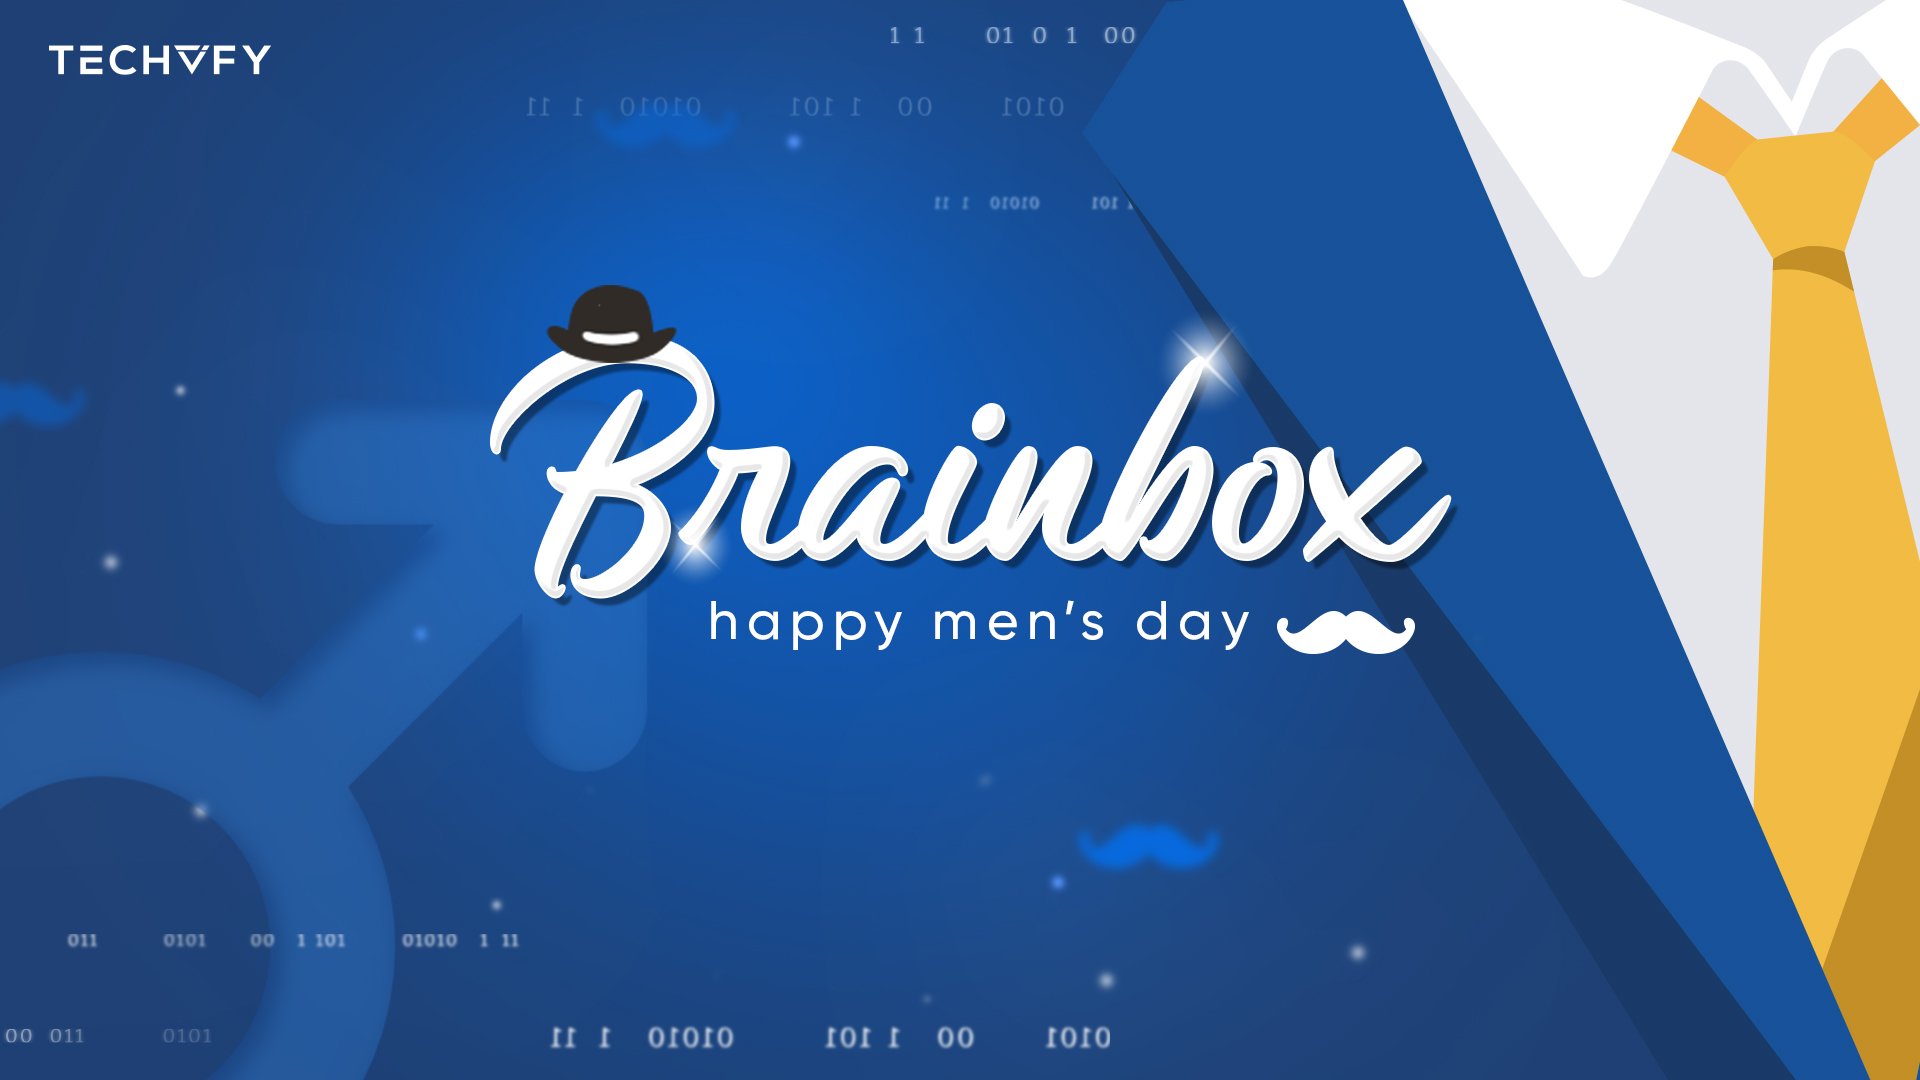 Happy TECHVIFY Men's Day - Brainbox